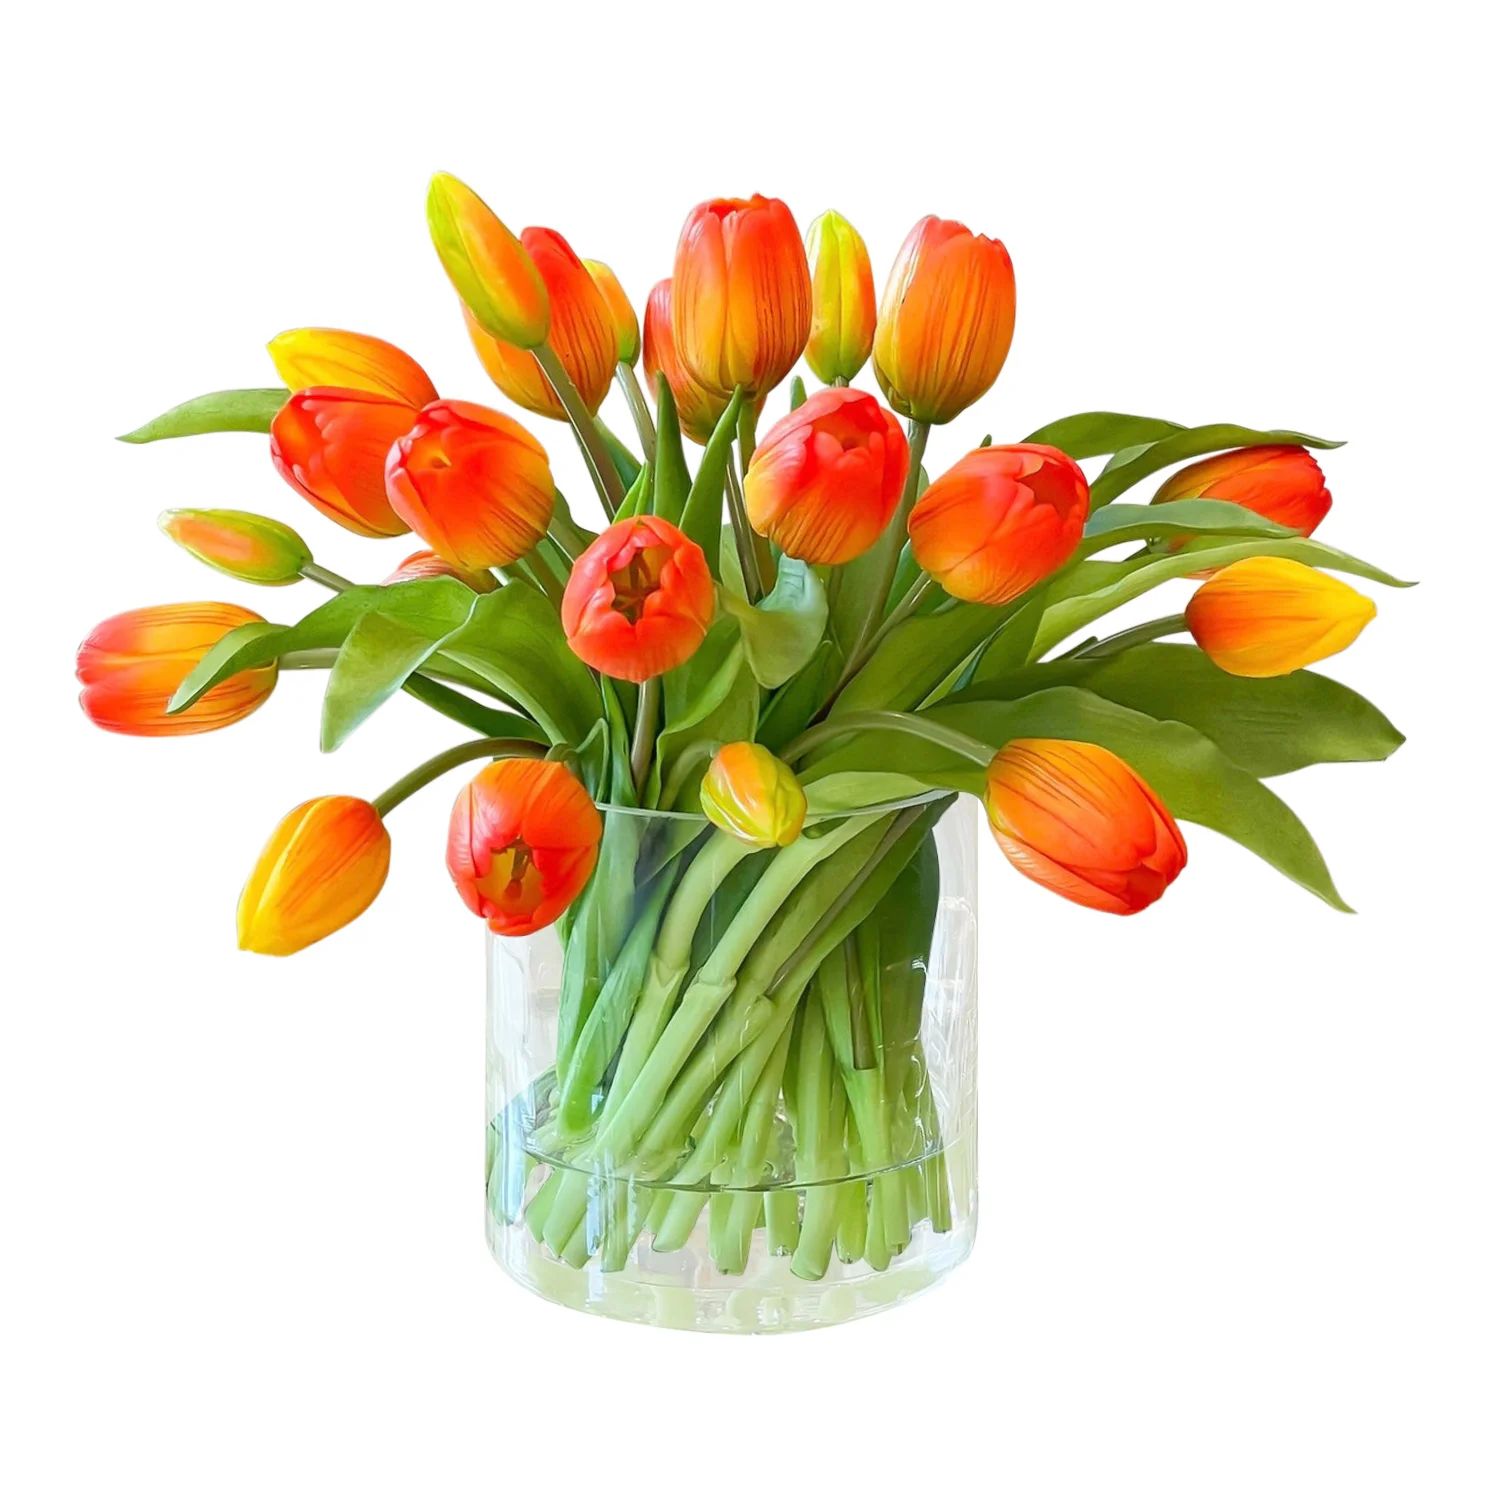 Tulips in Vase | Wayfair Professional